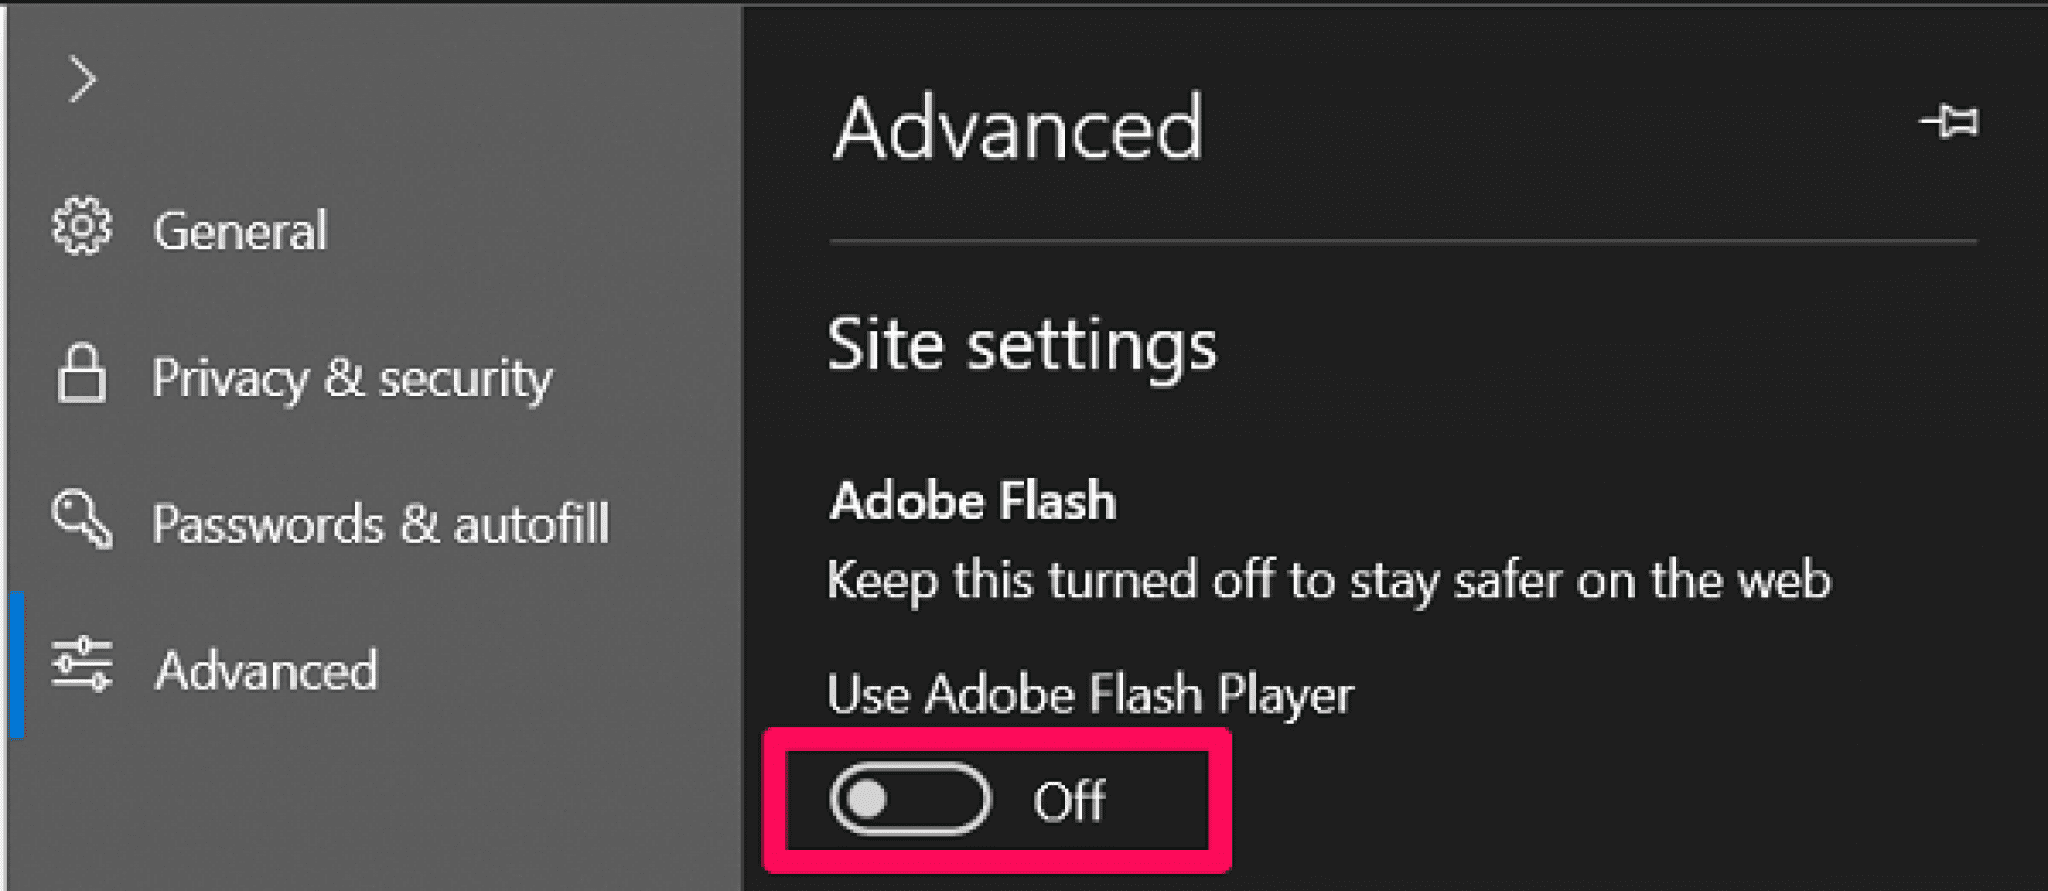 flash player download microsoft edge click ok